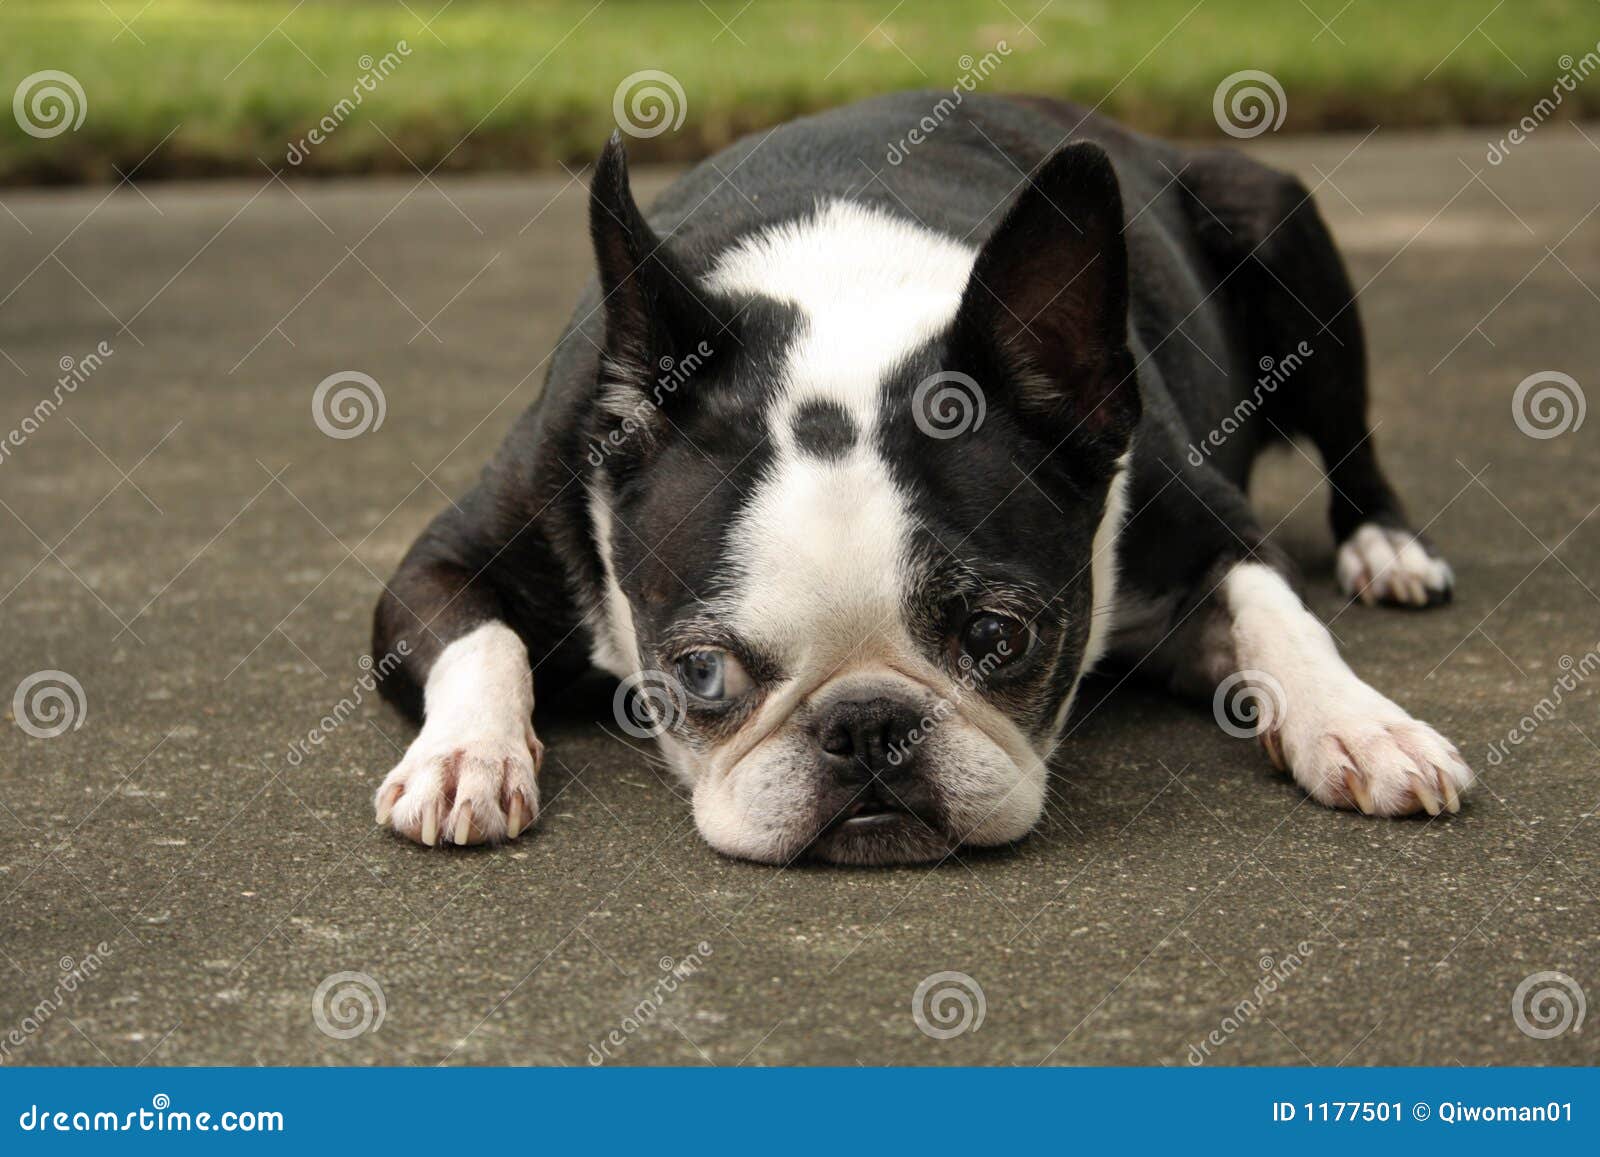 boston terrier lying down